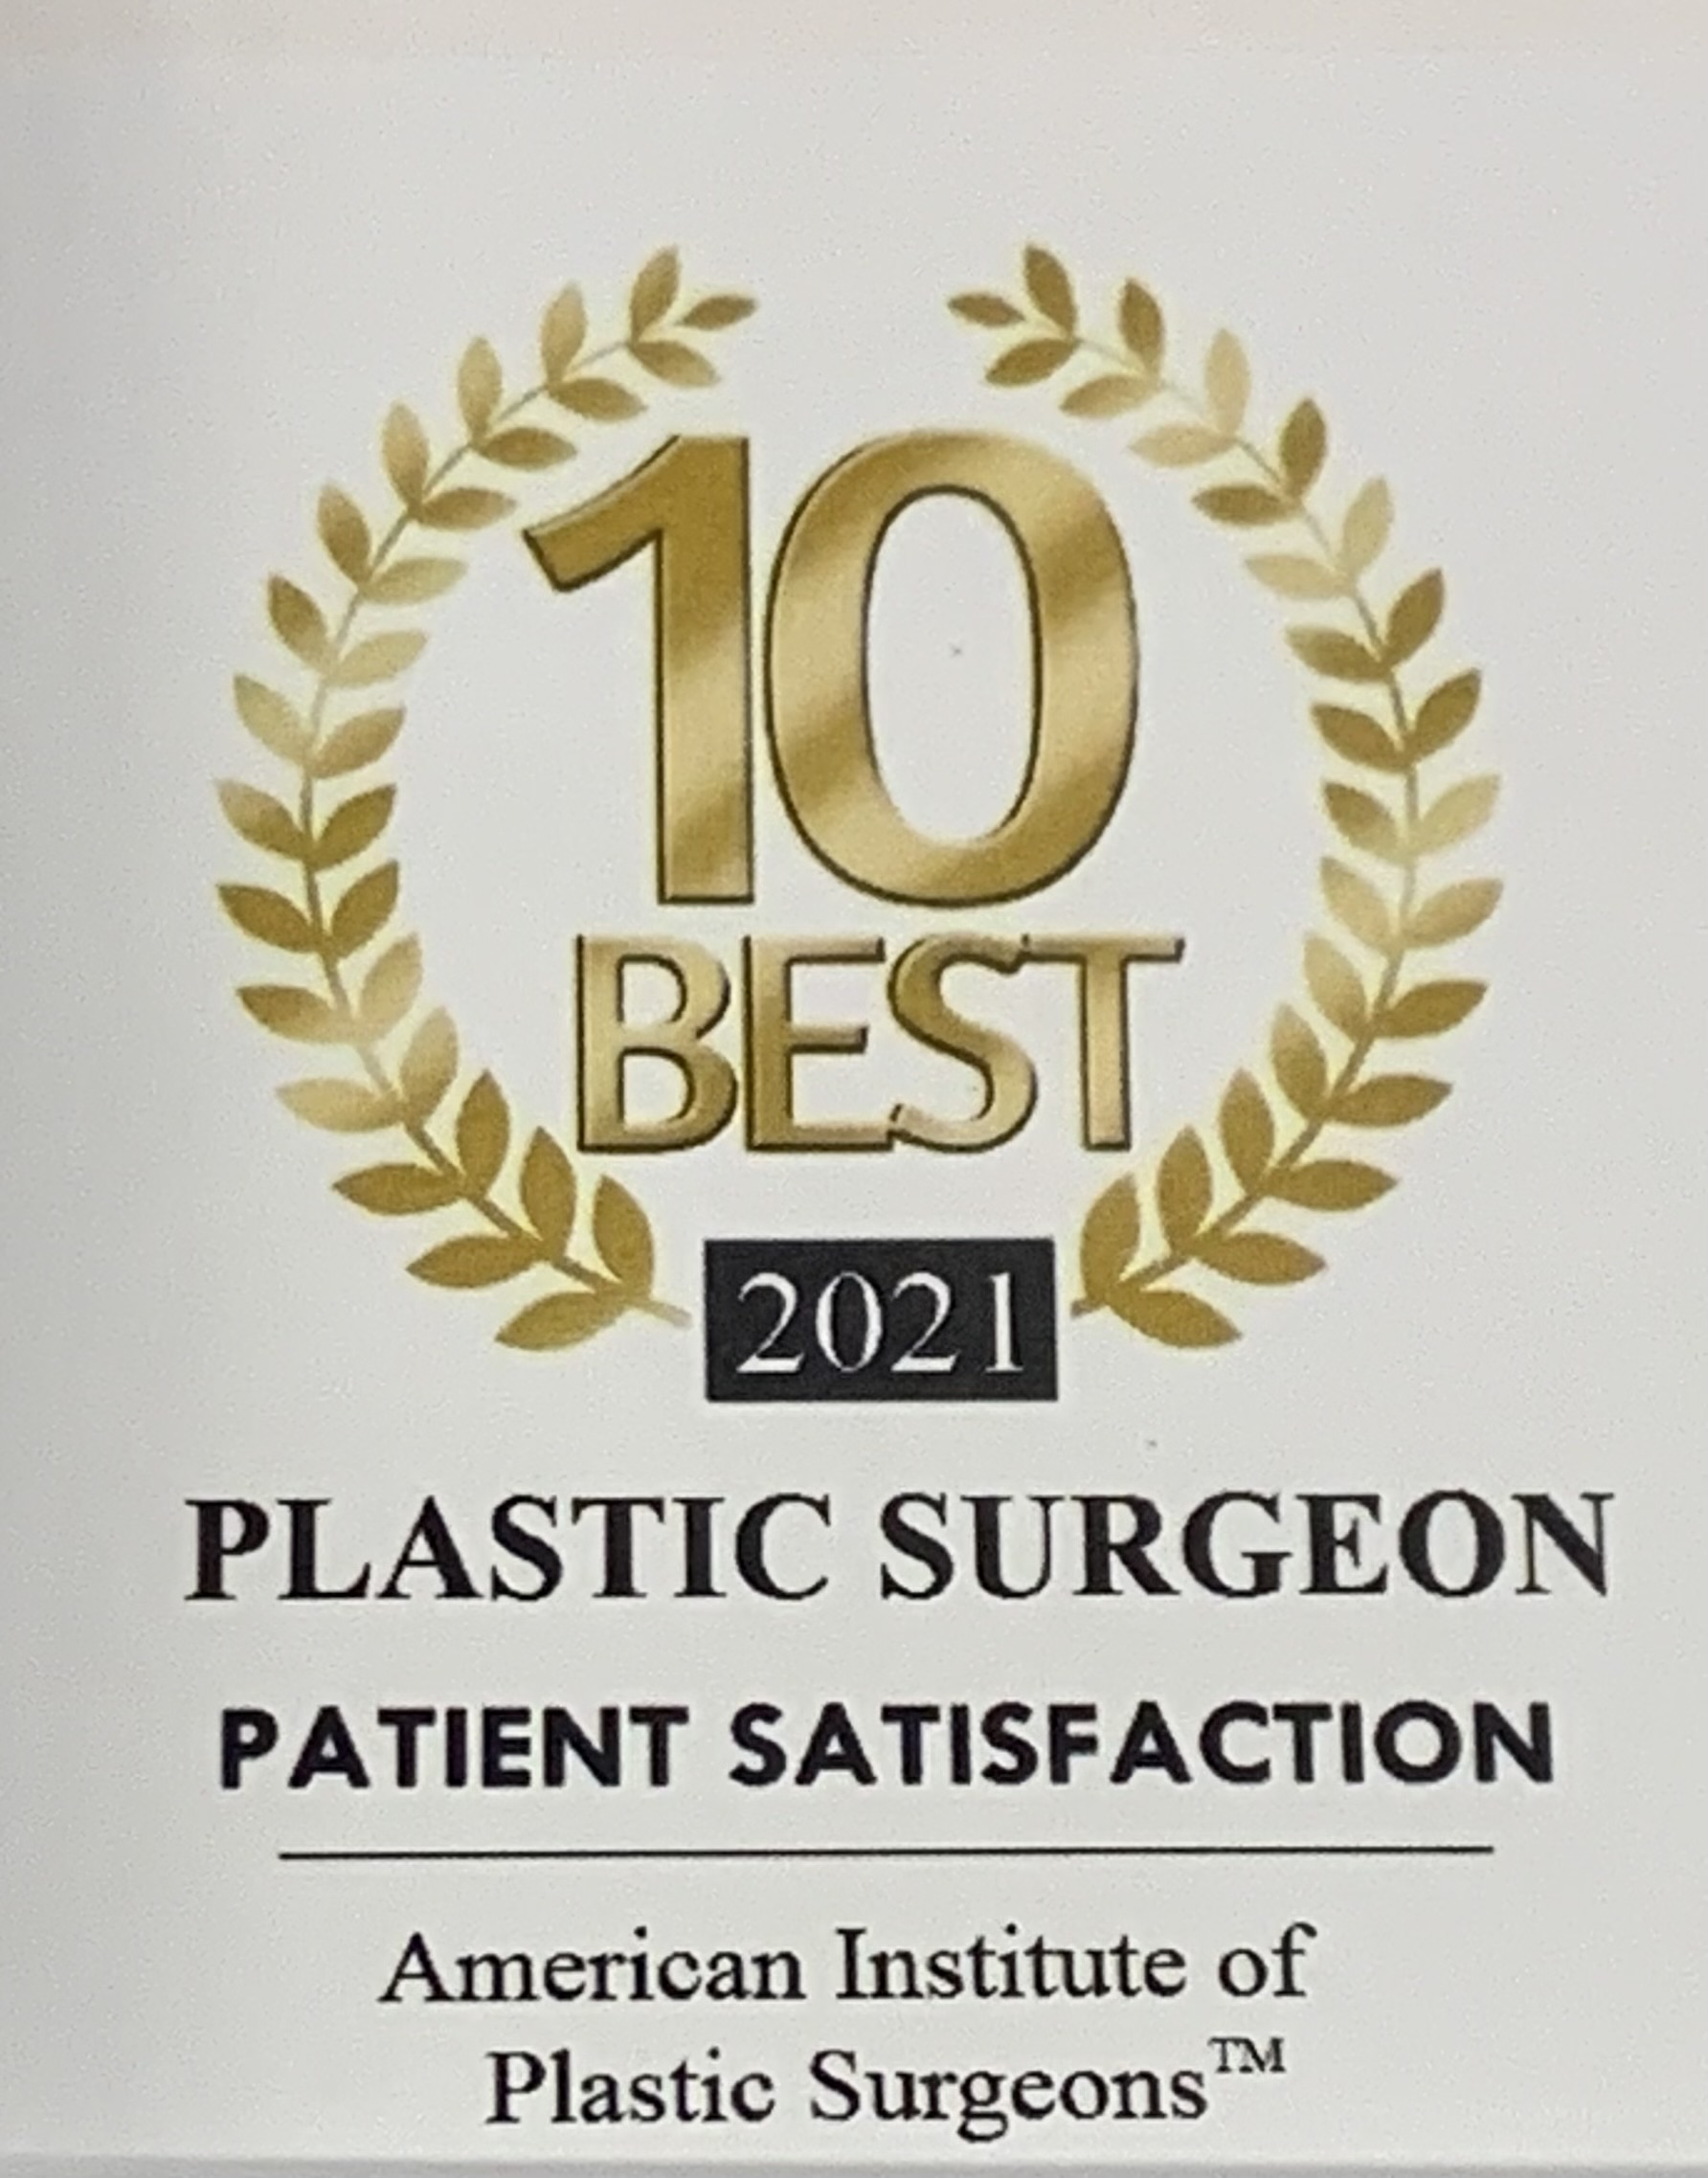 2021 10 Best Plastic Surgeon